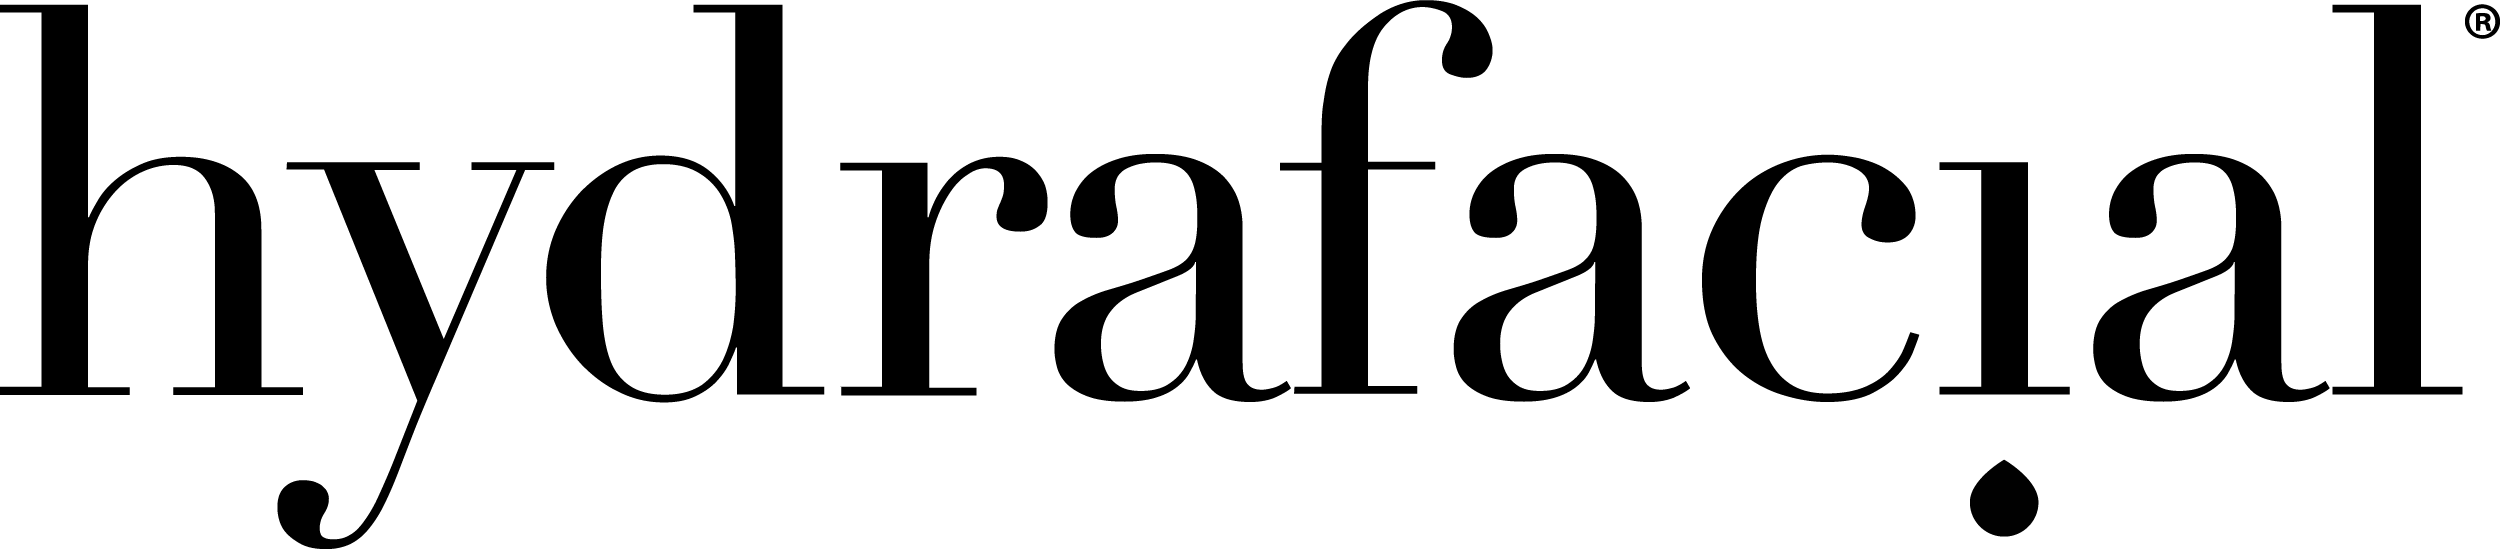 HF_logo